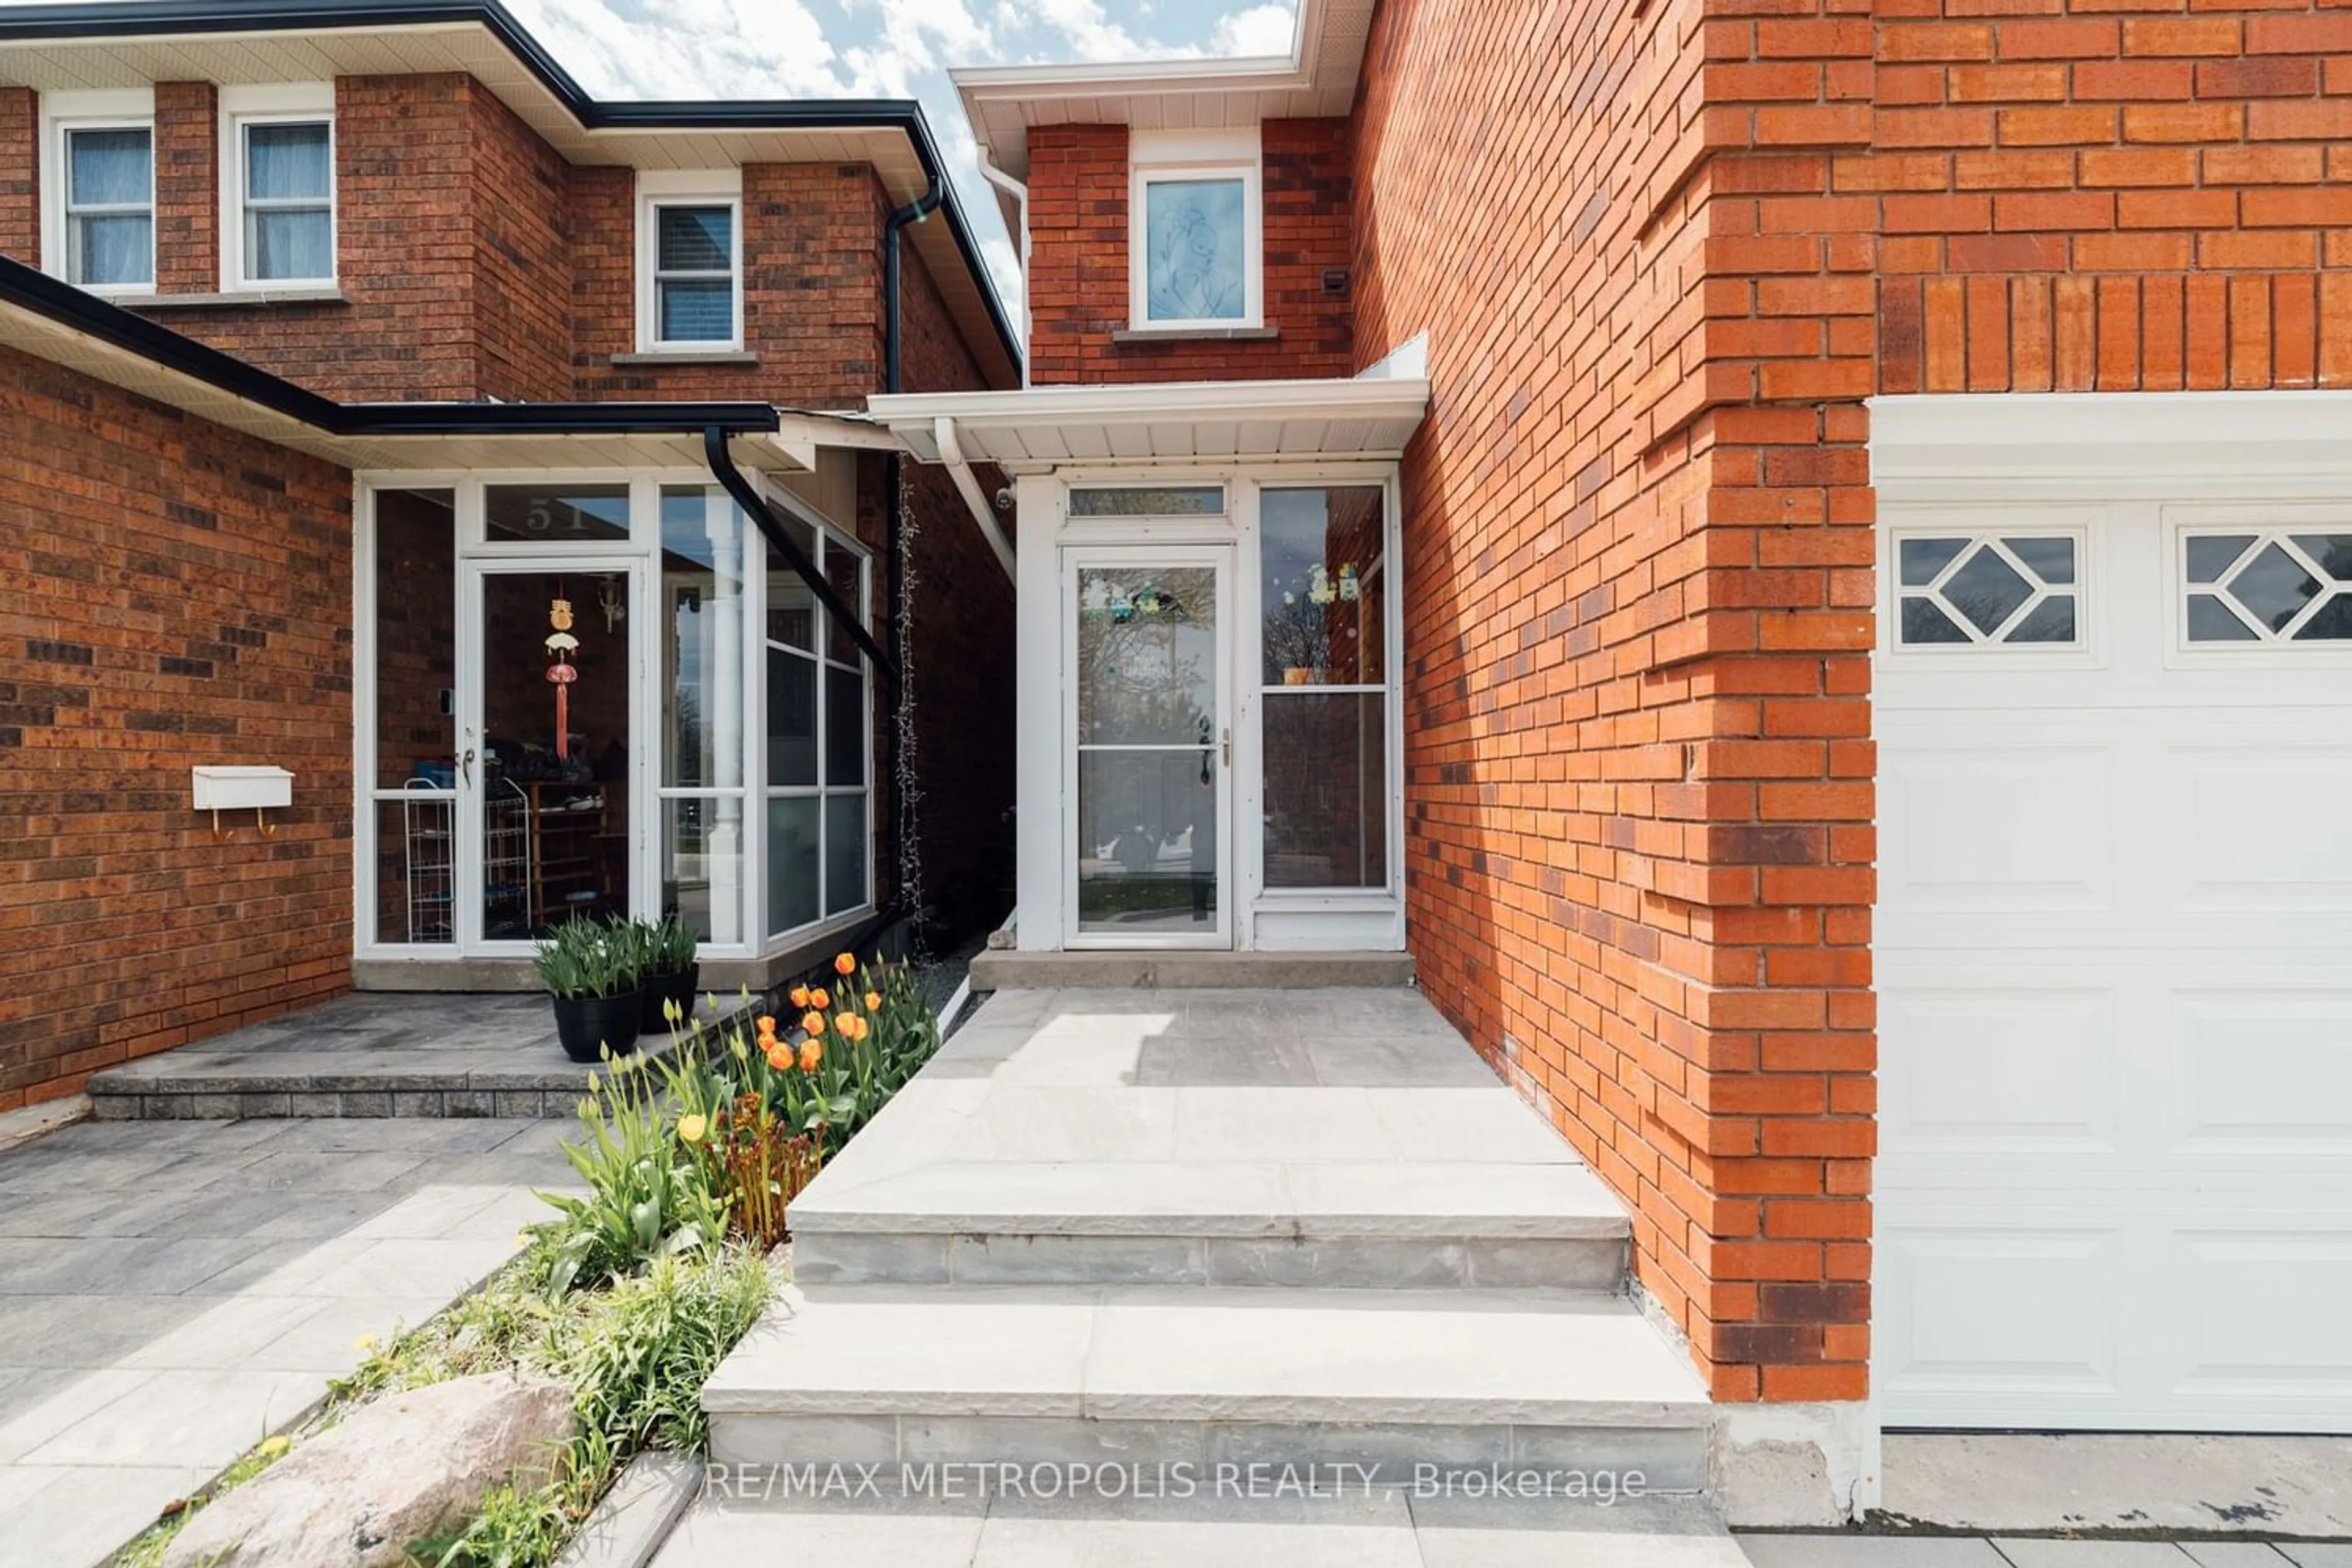 Home with brick exterior material for 53 Alanbull Sq, Toronto Ontario M1V 4M2